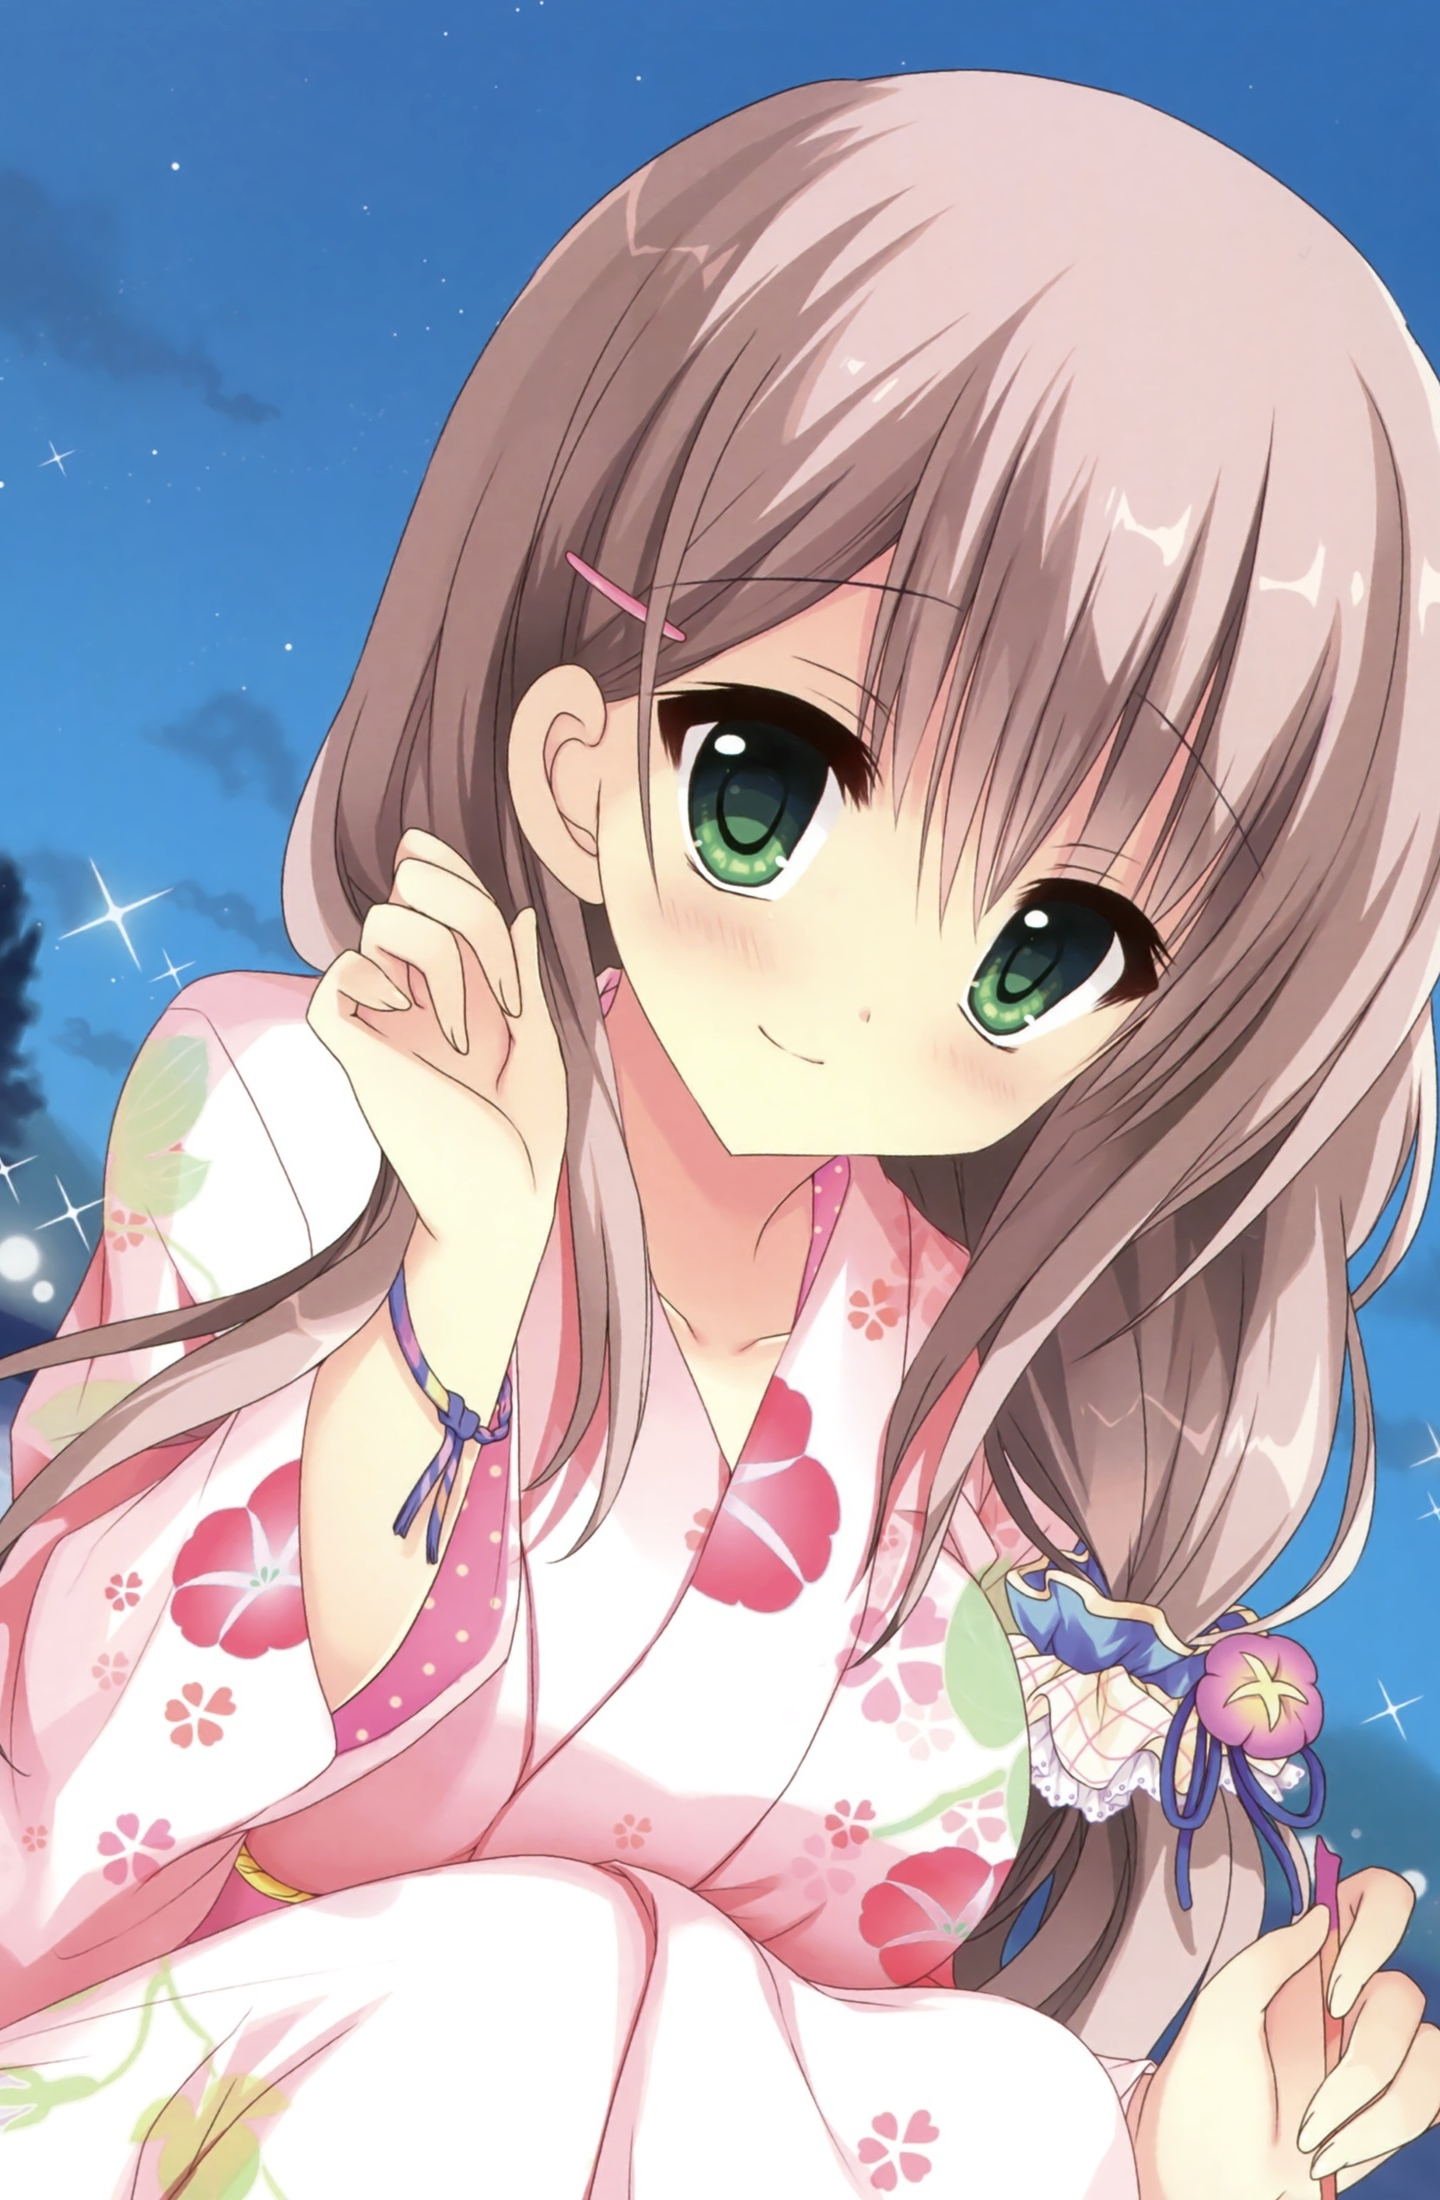 Kawaii cute anime girl Wallpapers Download